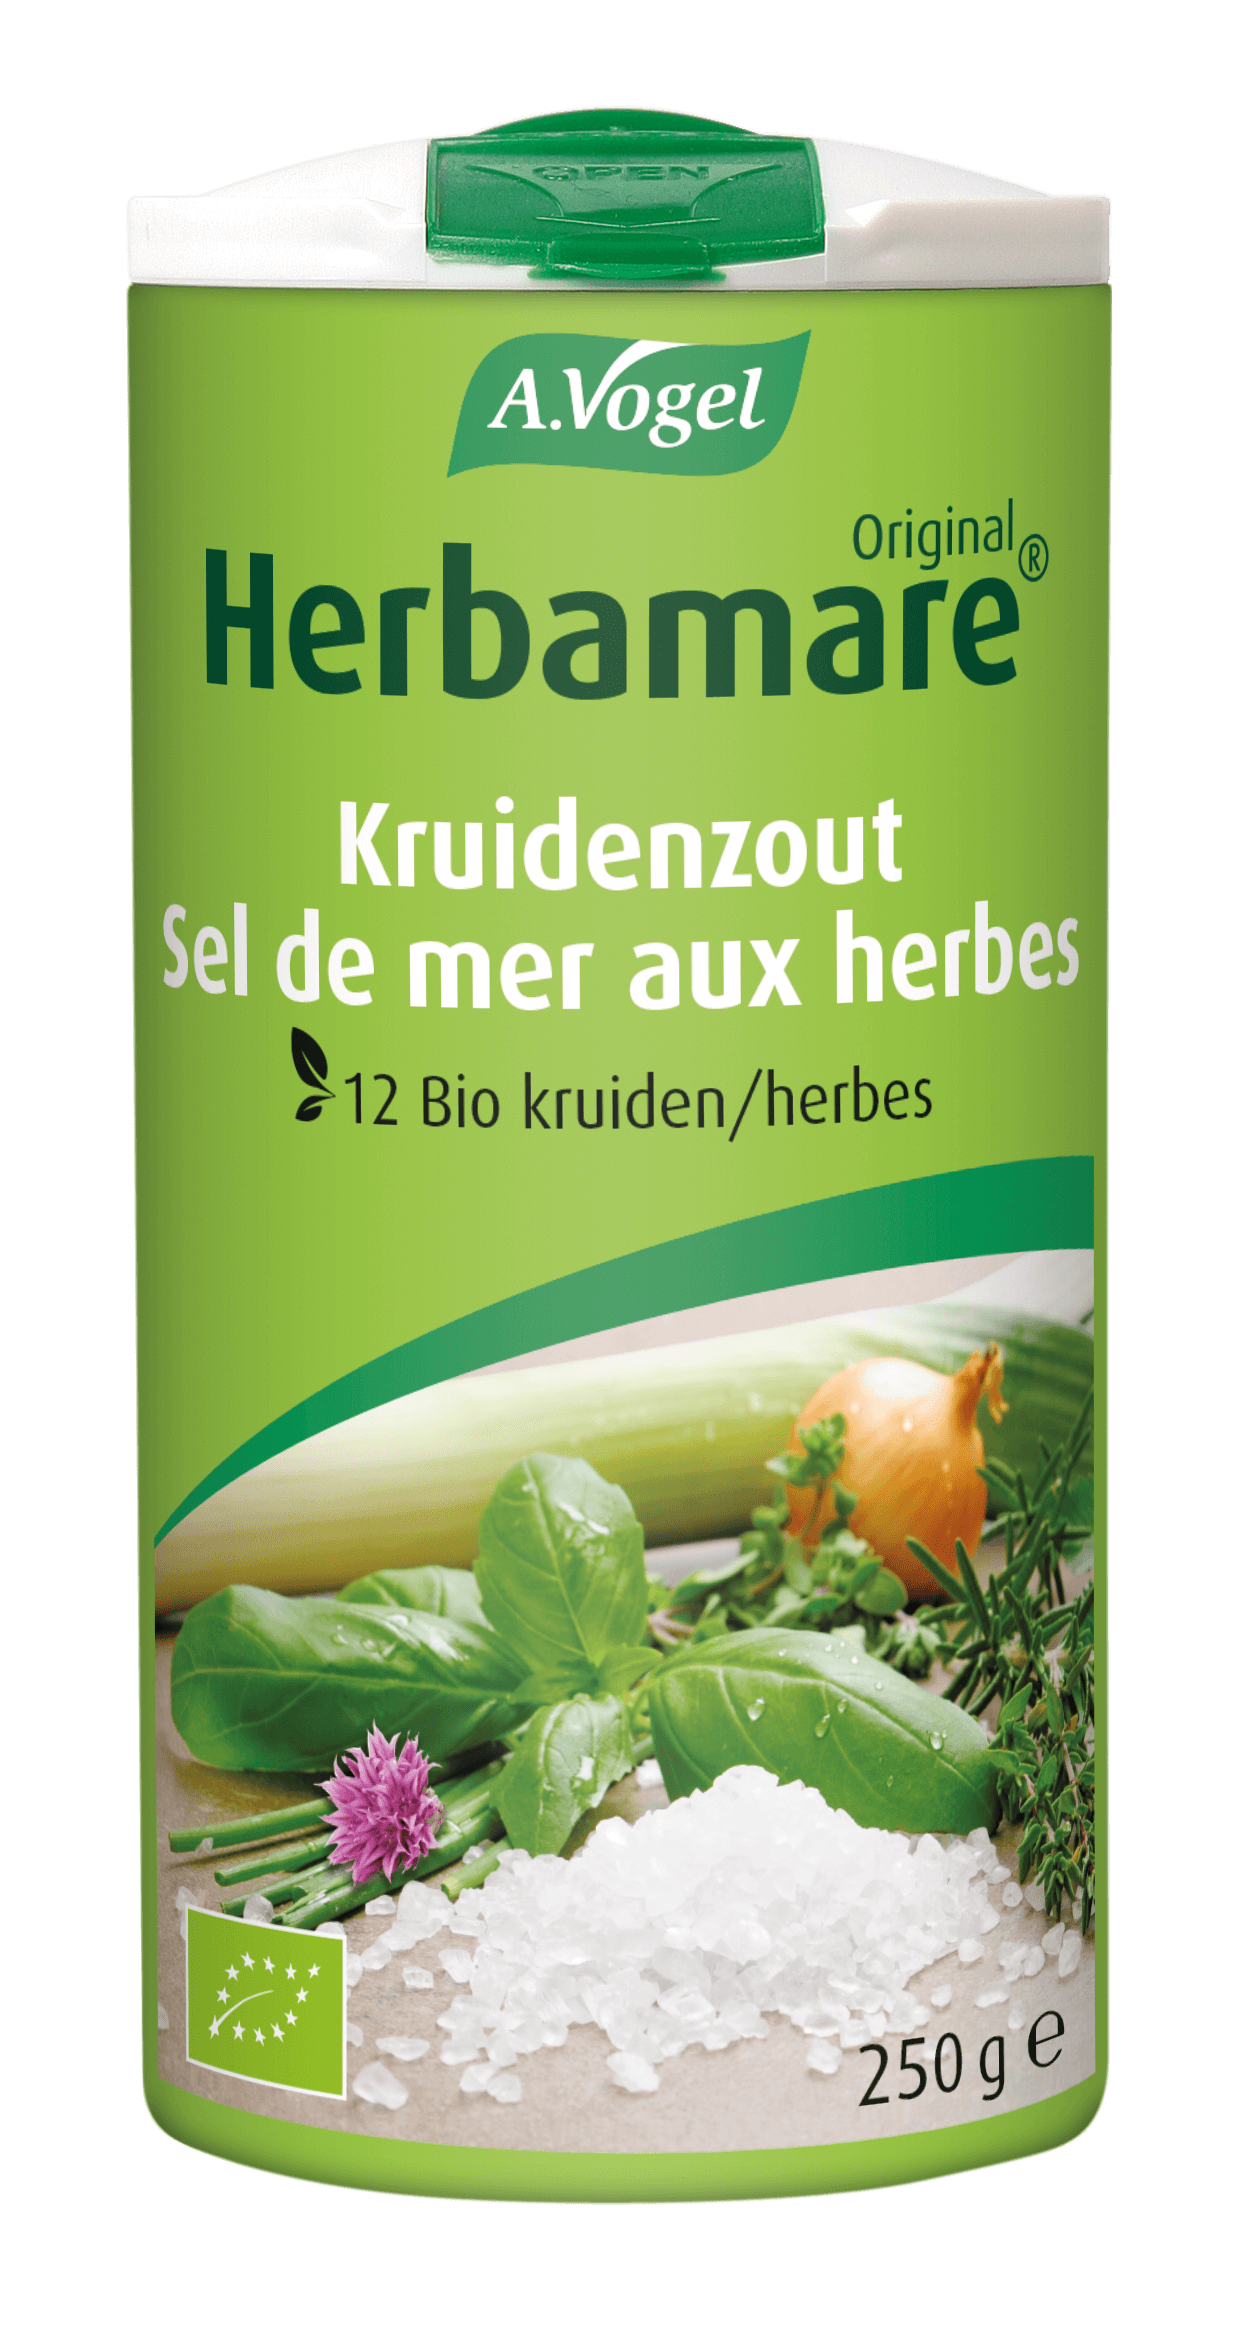 Herbamare Original Kruidenzout | A.Vogel Producten